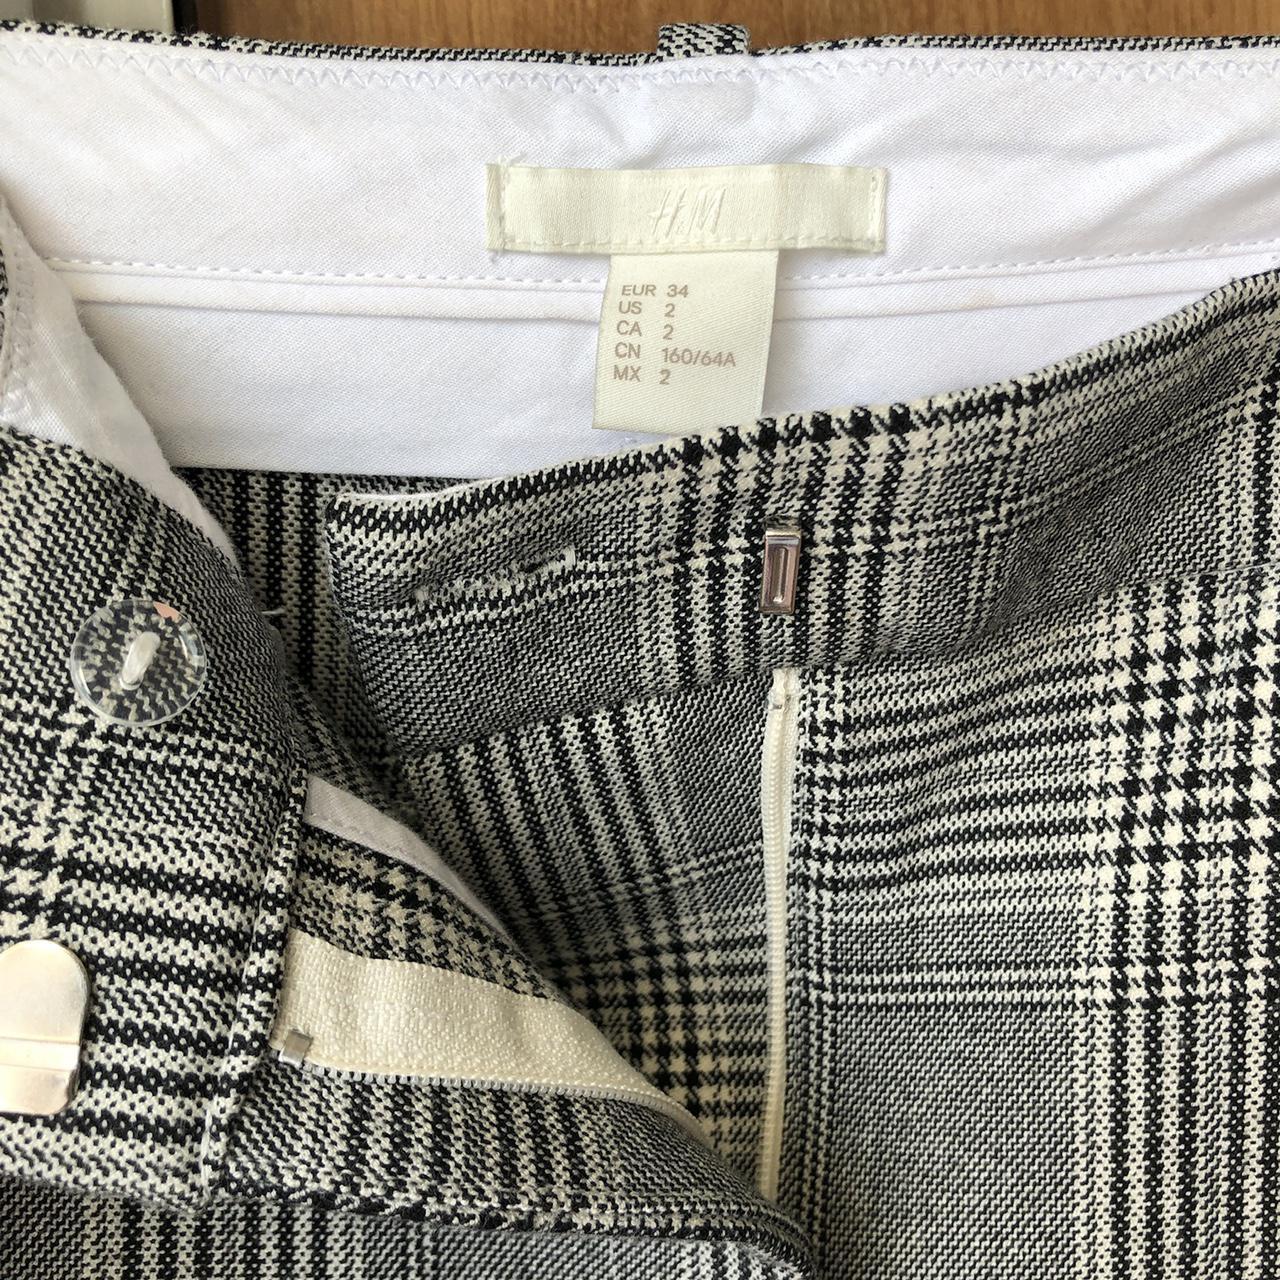 H&M plaid / tartan trousers in grey tones - EUR 34... - Depop